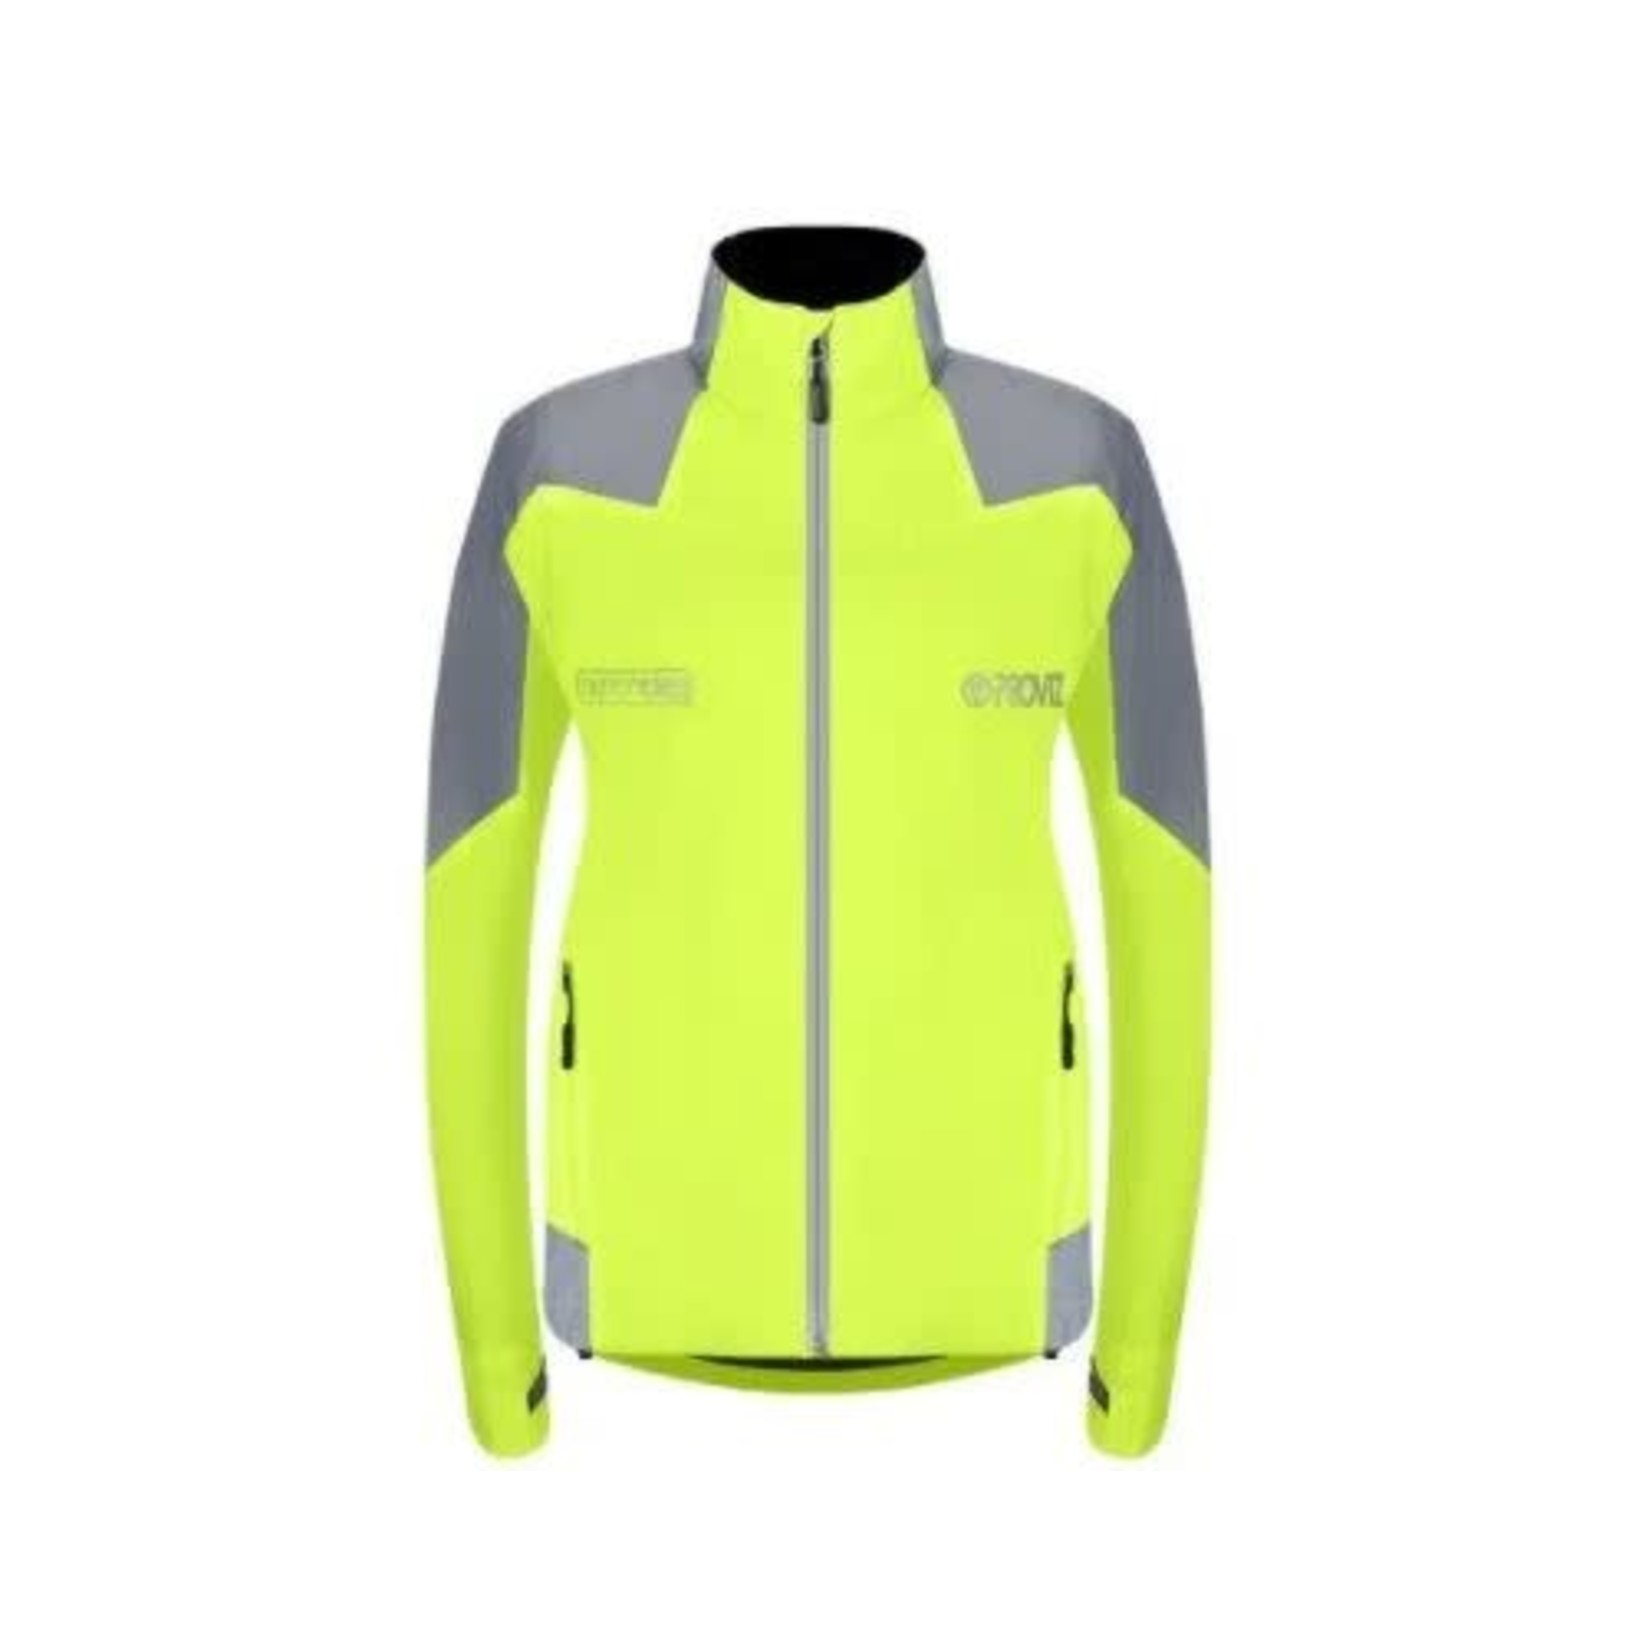 Proviz Proviz Bike/Cycling Ladies Nightrider-High Visibility Jacket - Yellow(12) PV1509